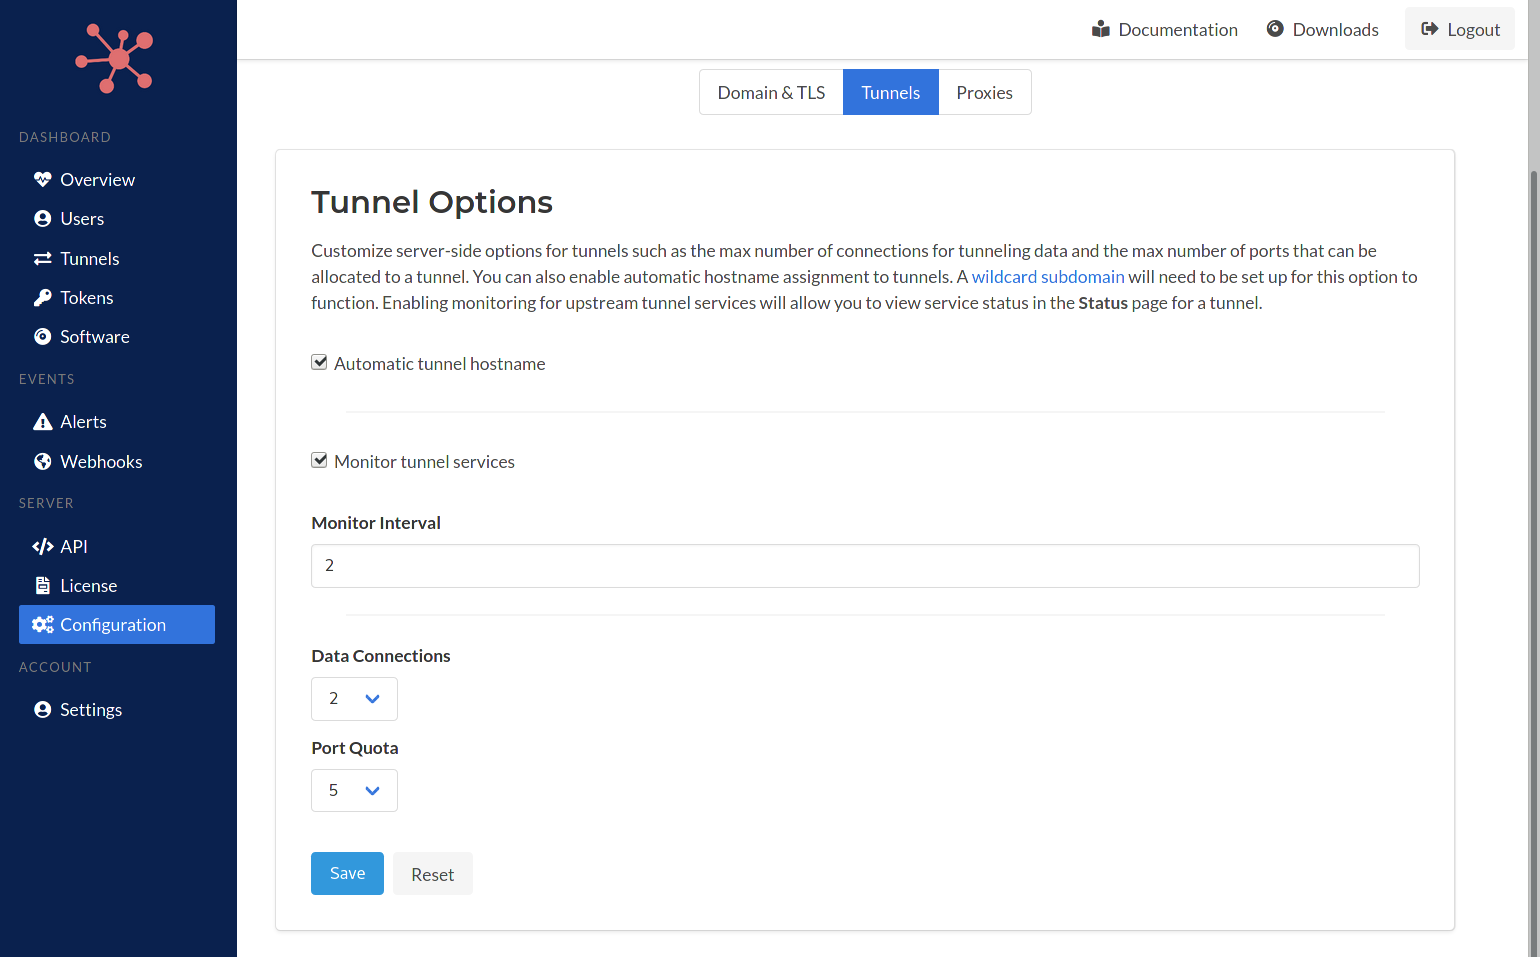 Tunnel Options